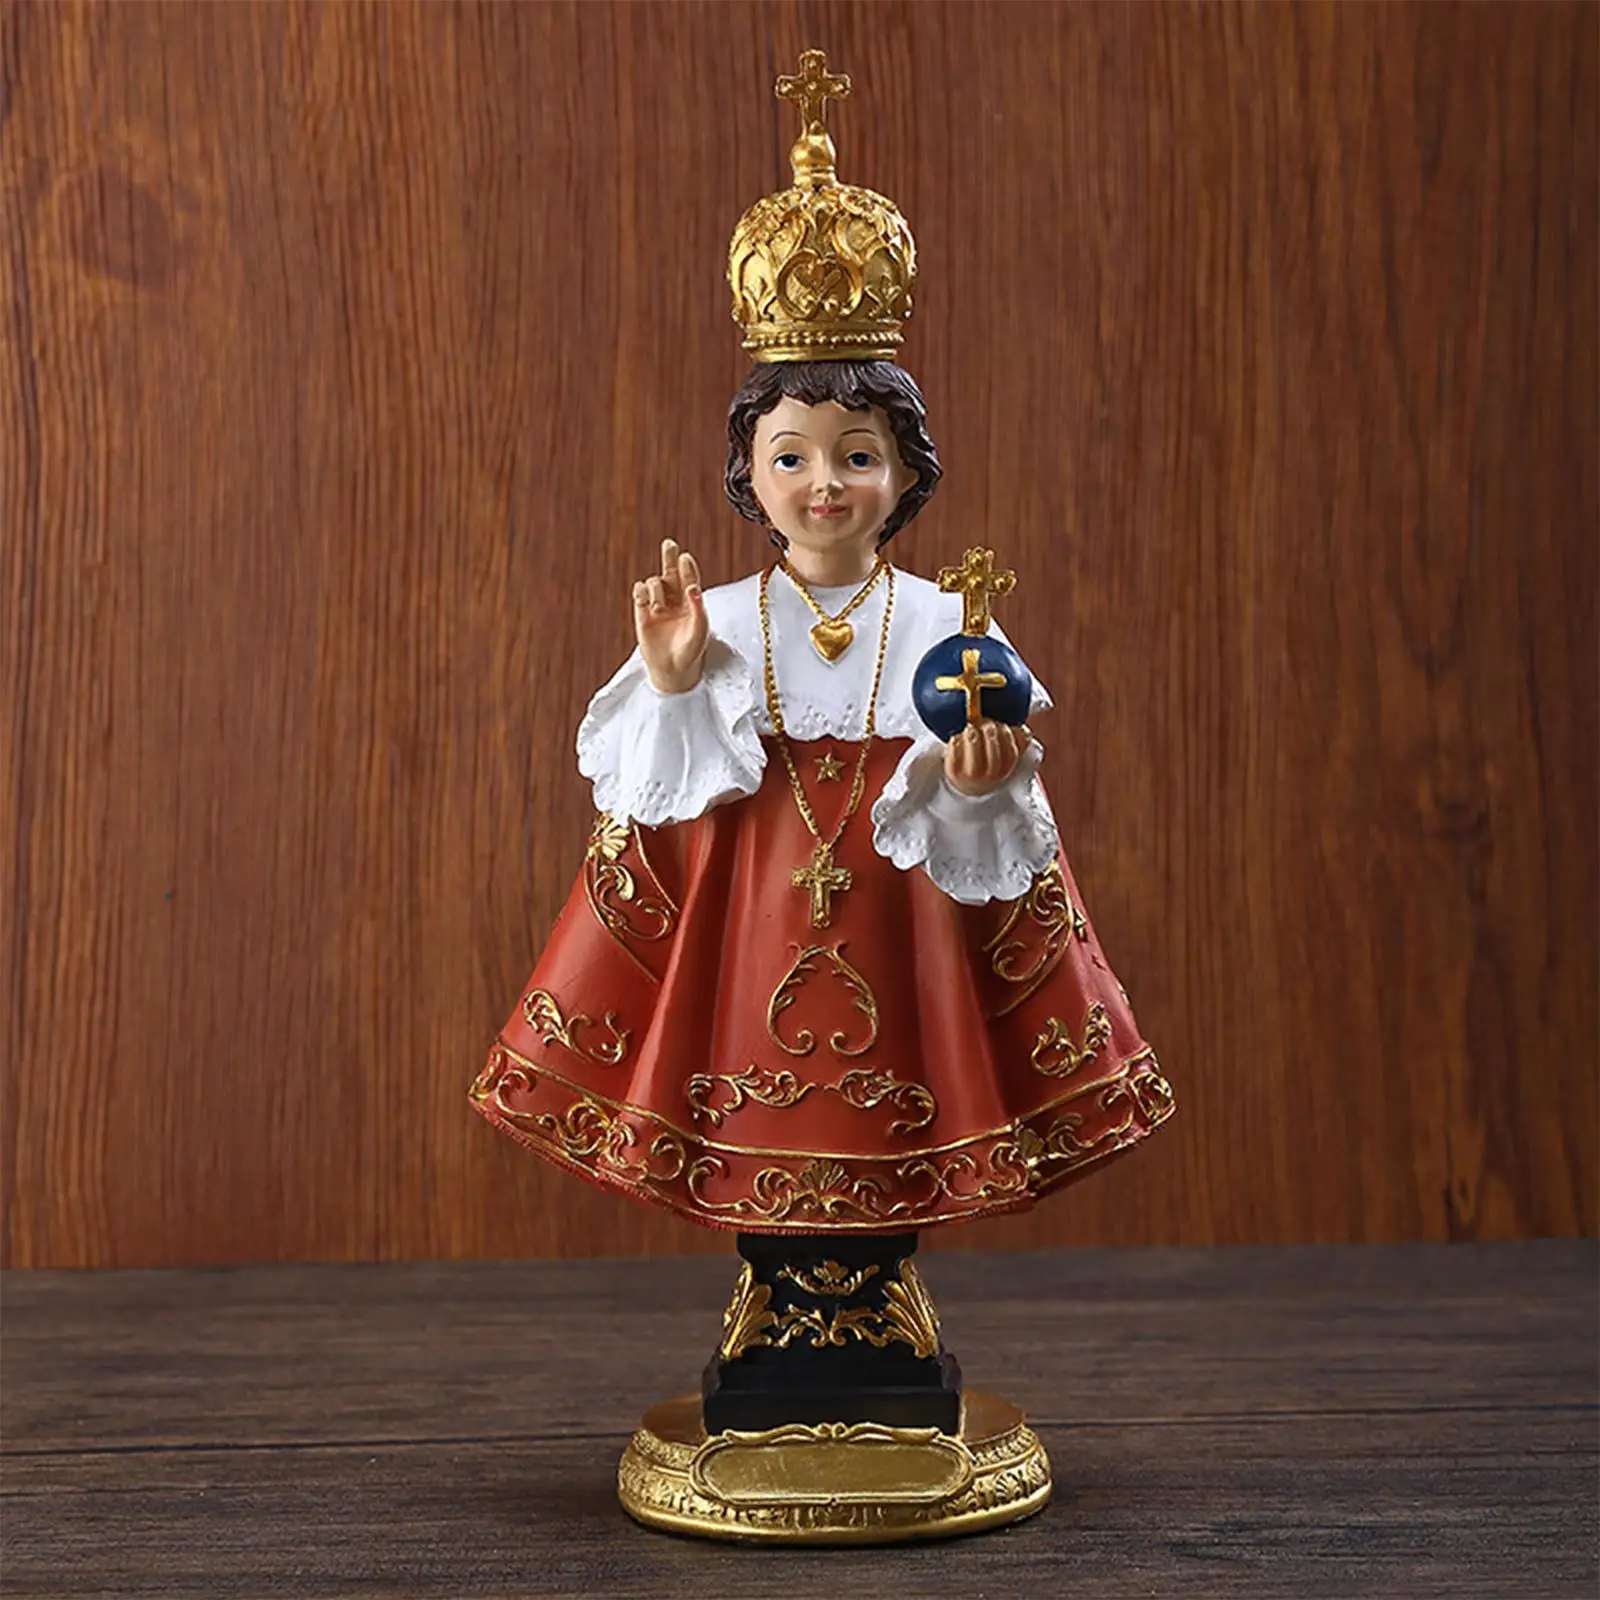 Infant Jesus Figurine Sculpture Religious Craft for Living Room Home Decor